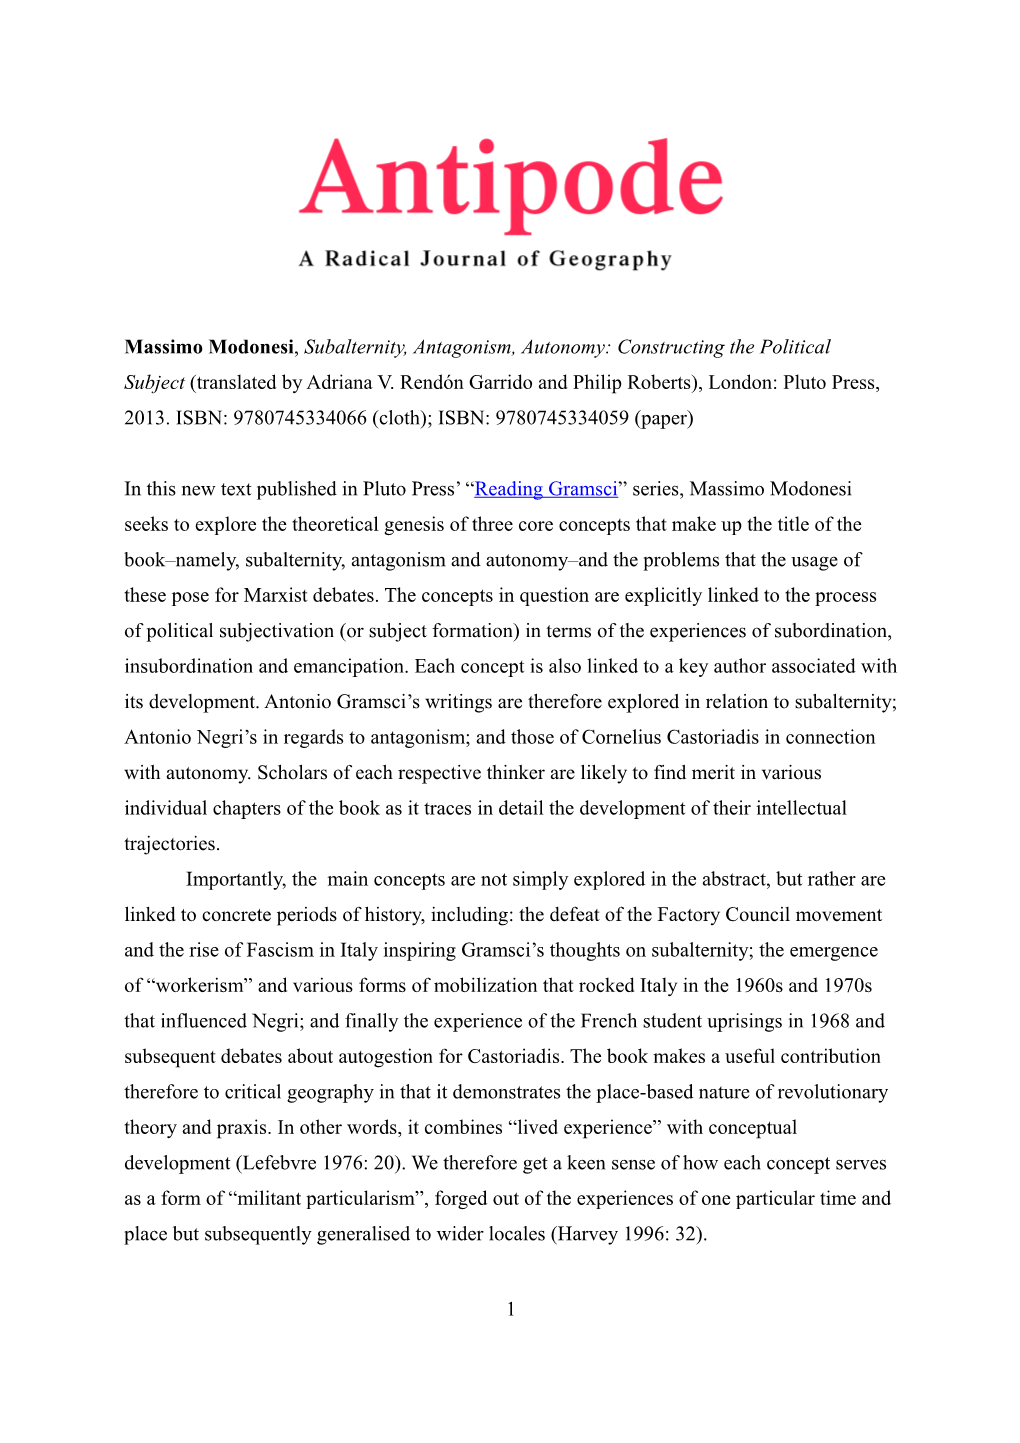 Massimo Modonesi, Subalternity, Antagonism, Autonomy: Constructing the Political Subject (Translated by Adriana V